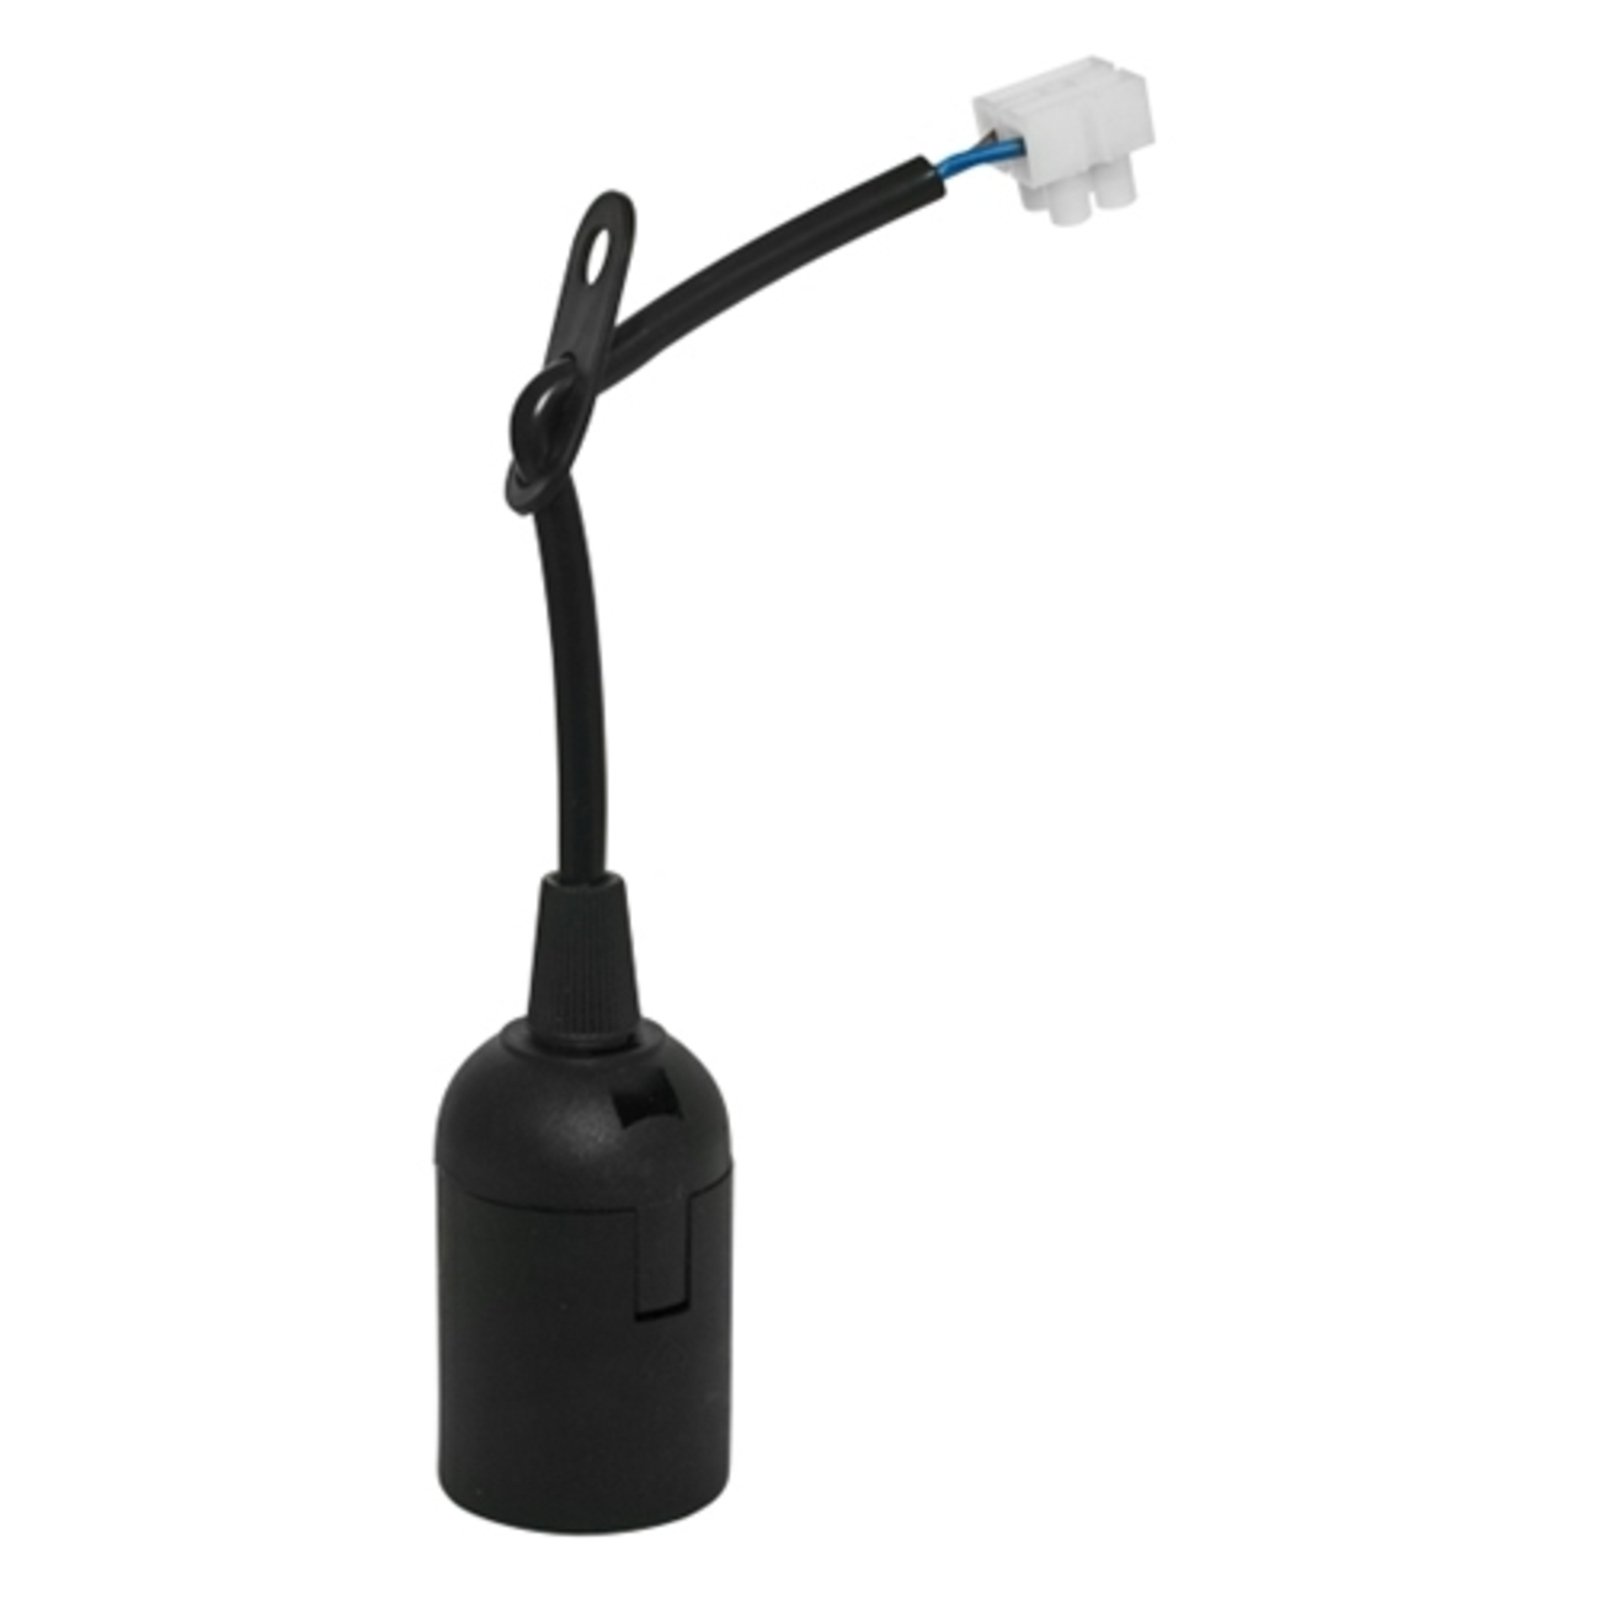 E27 lamp socket